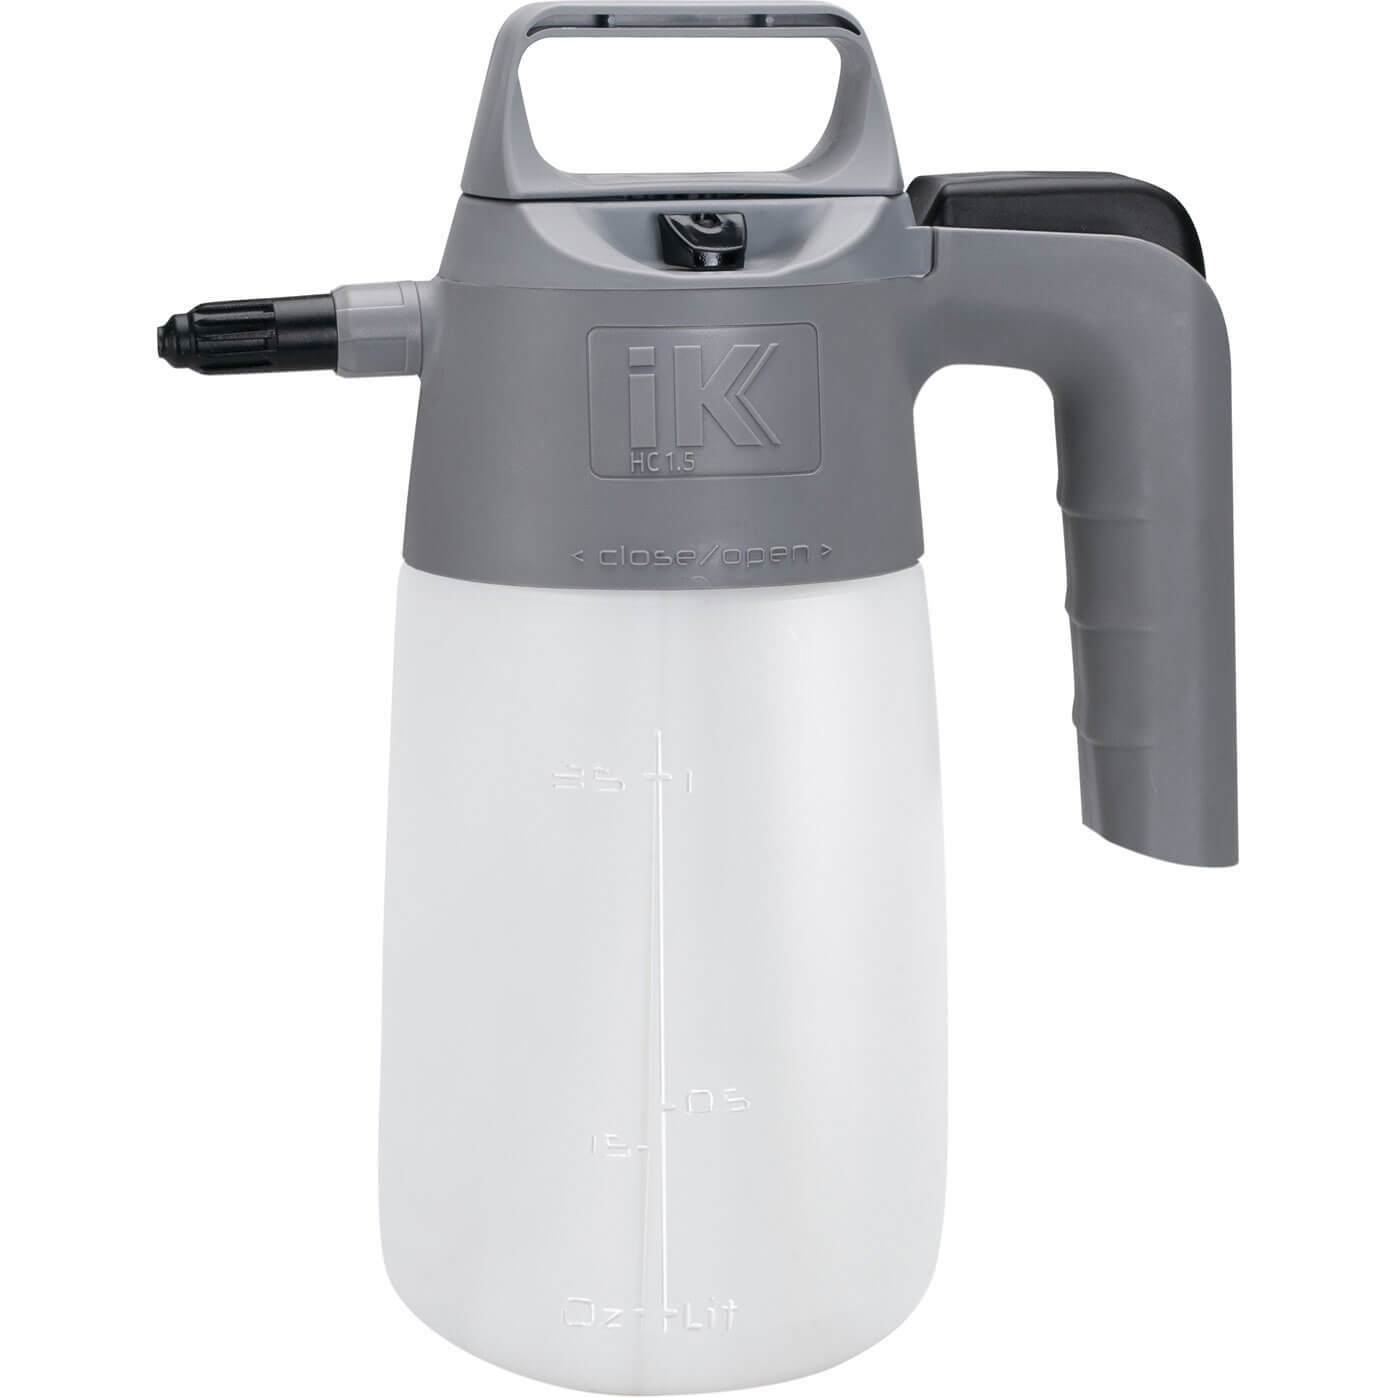 Image of Matabi IK HC 1.5 Water Sprayer 1.5l